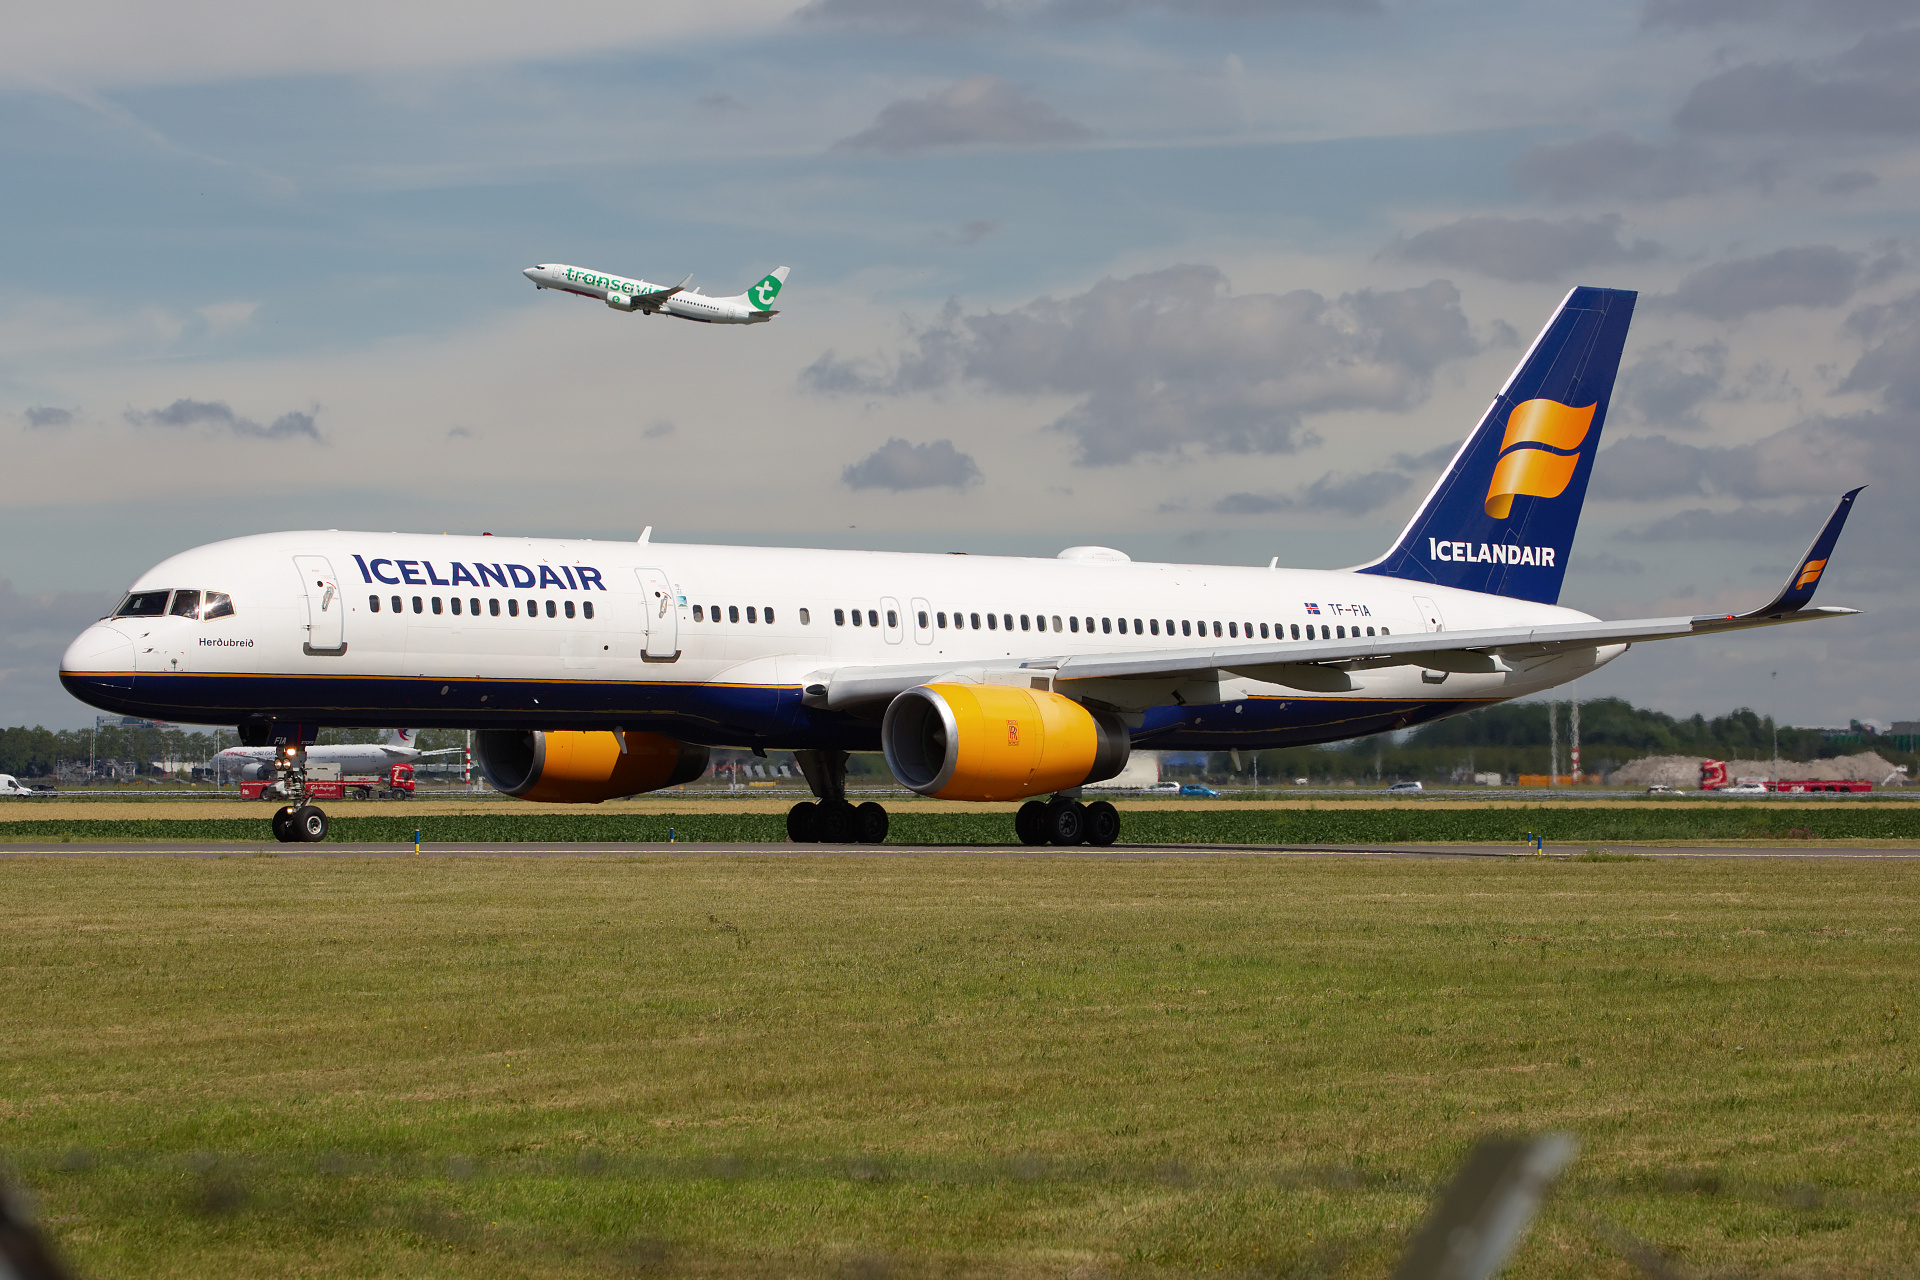 TF-FIA, Icelandair (Aircraft » Schiphol Spotting » Boeing 757-200)